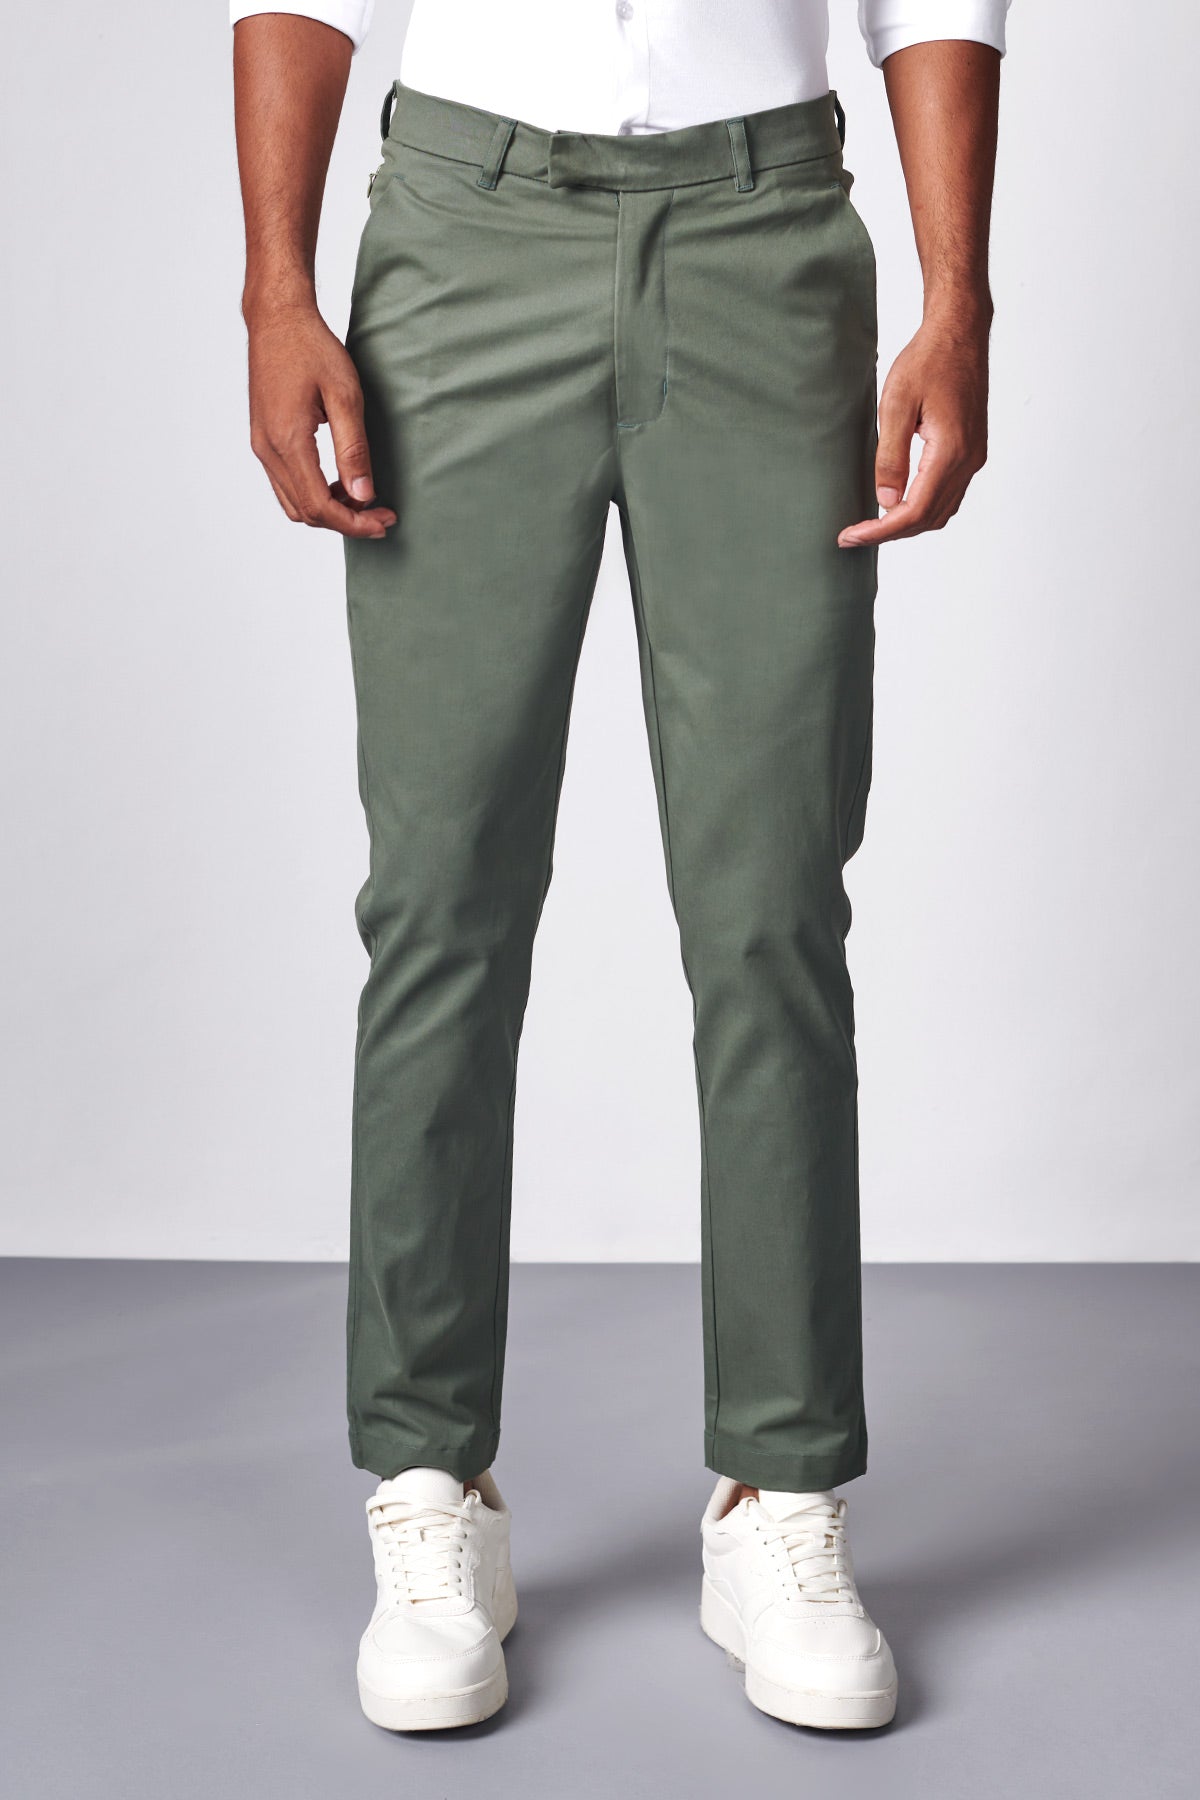 Buy The 24 Fern Green Trouser| Beyours